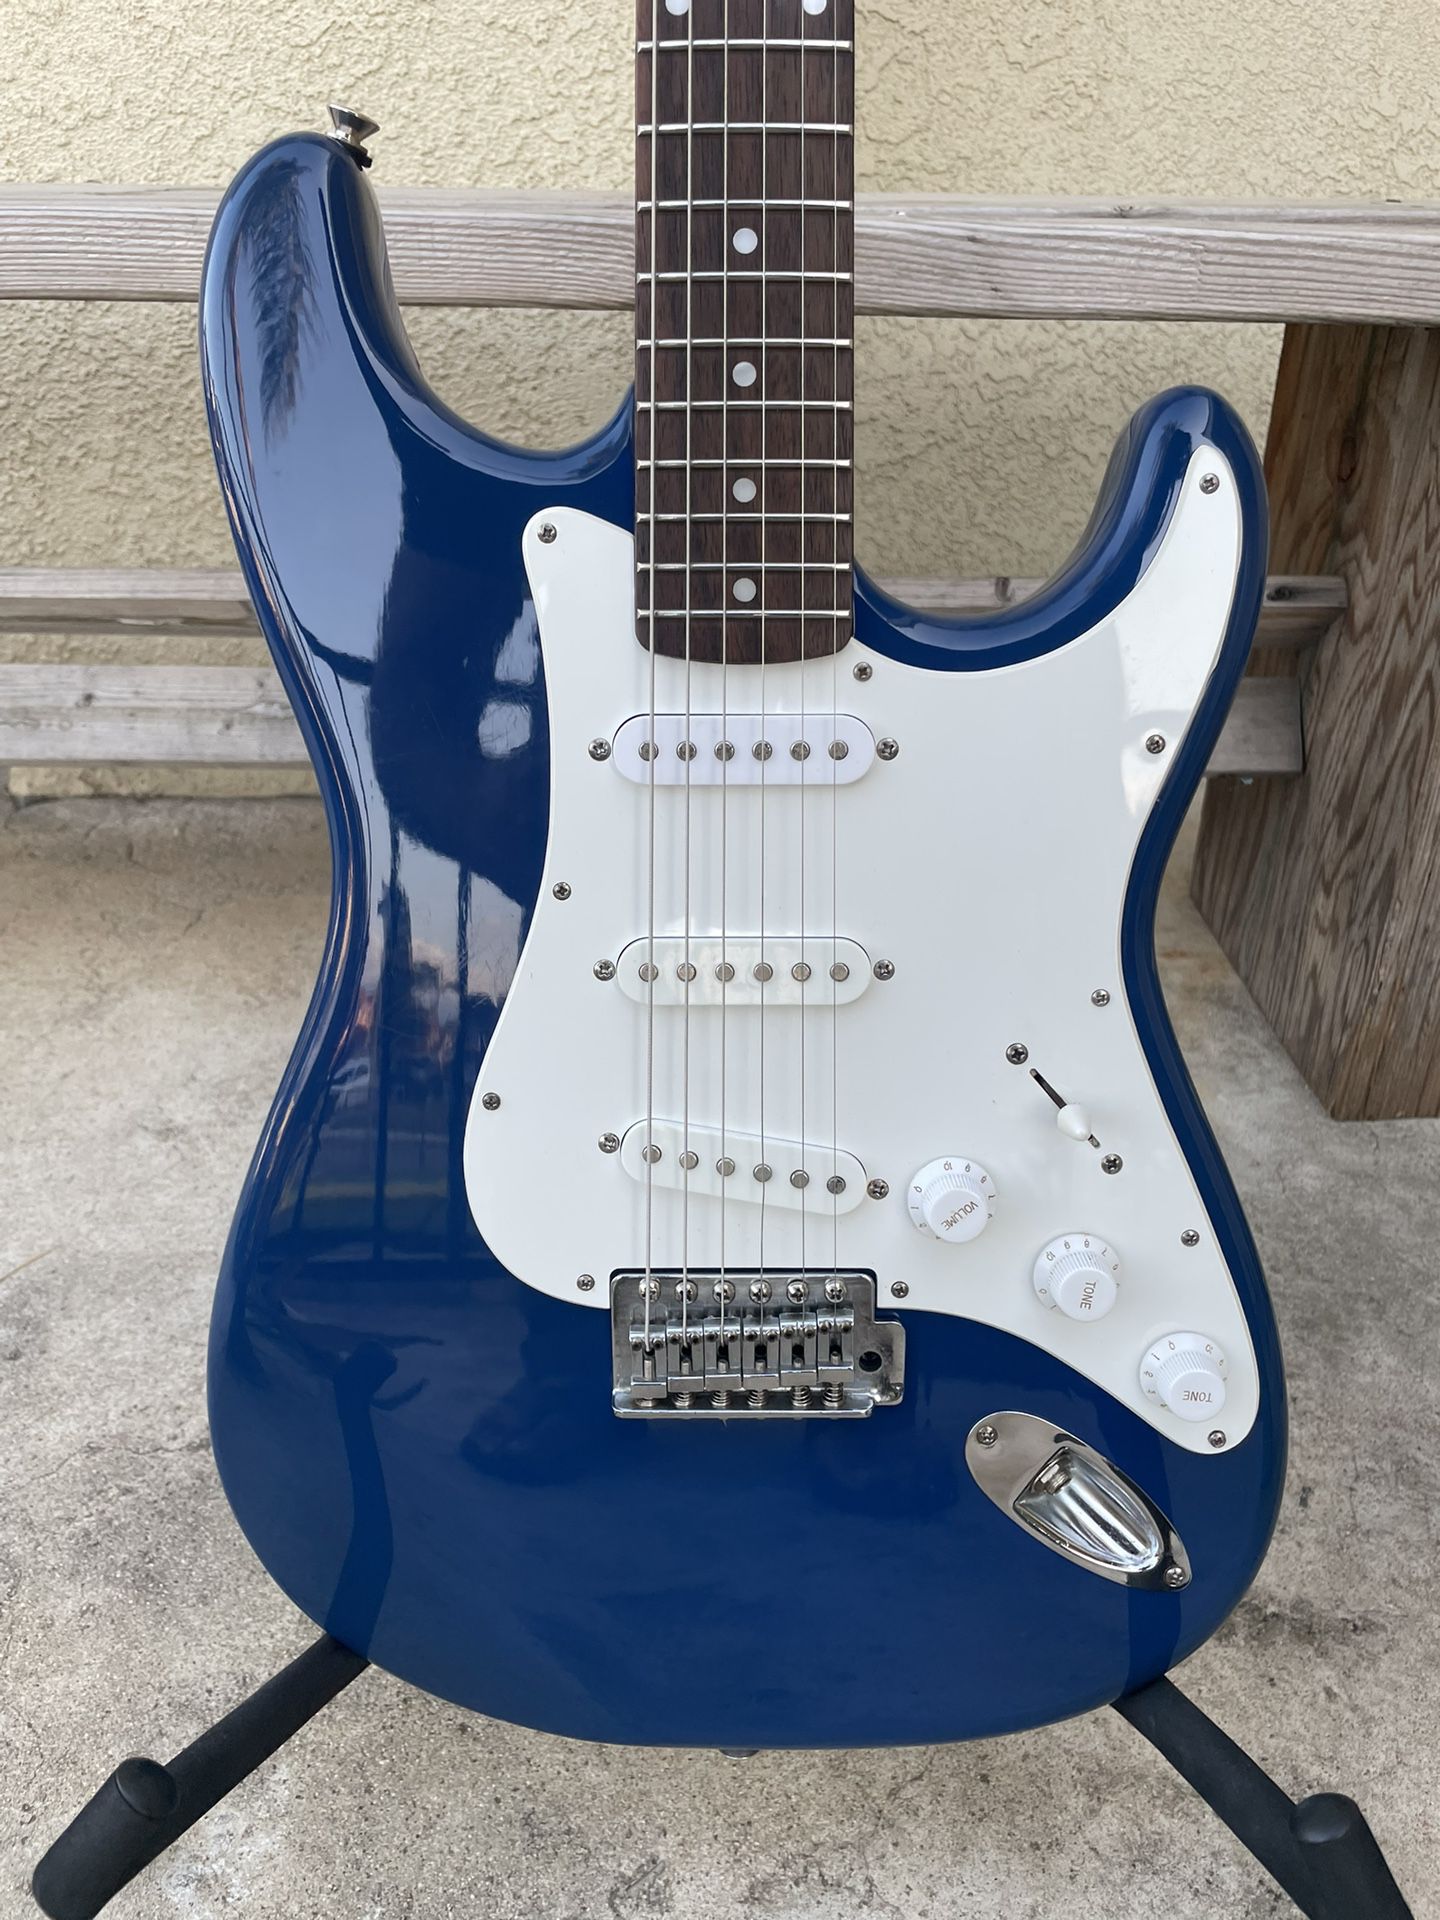 Like New Fender Squier Stratocaster For Sale